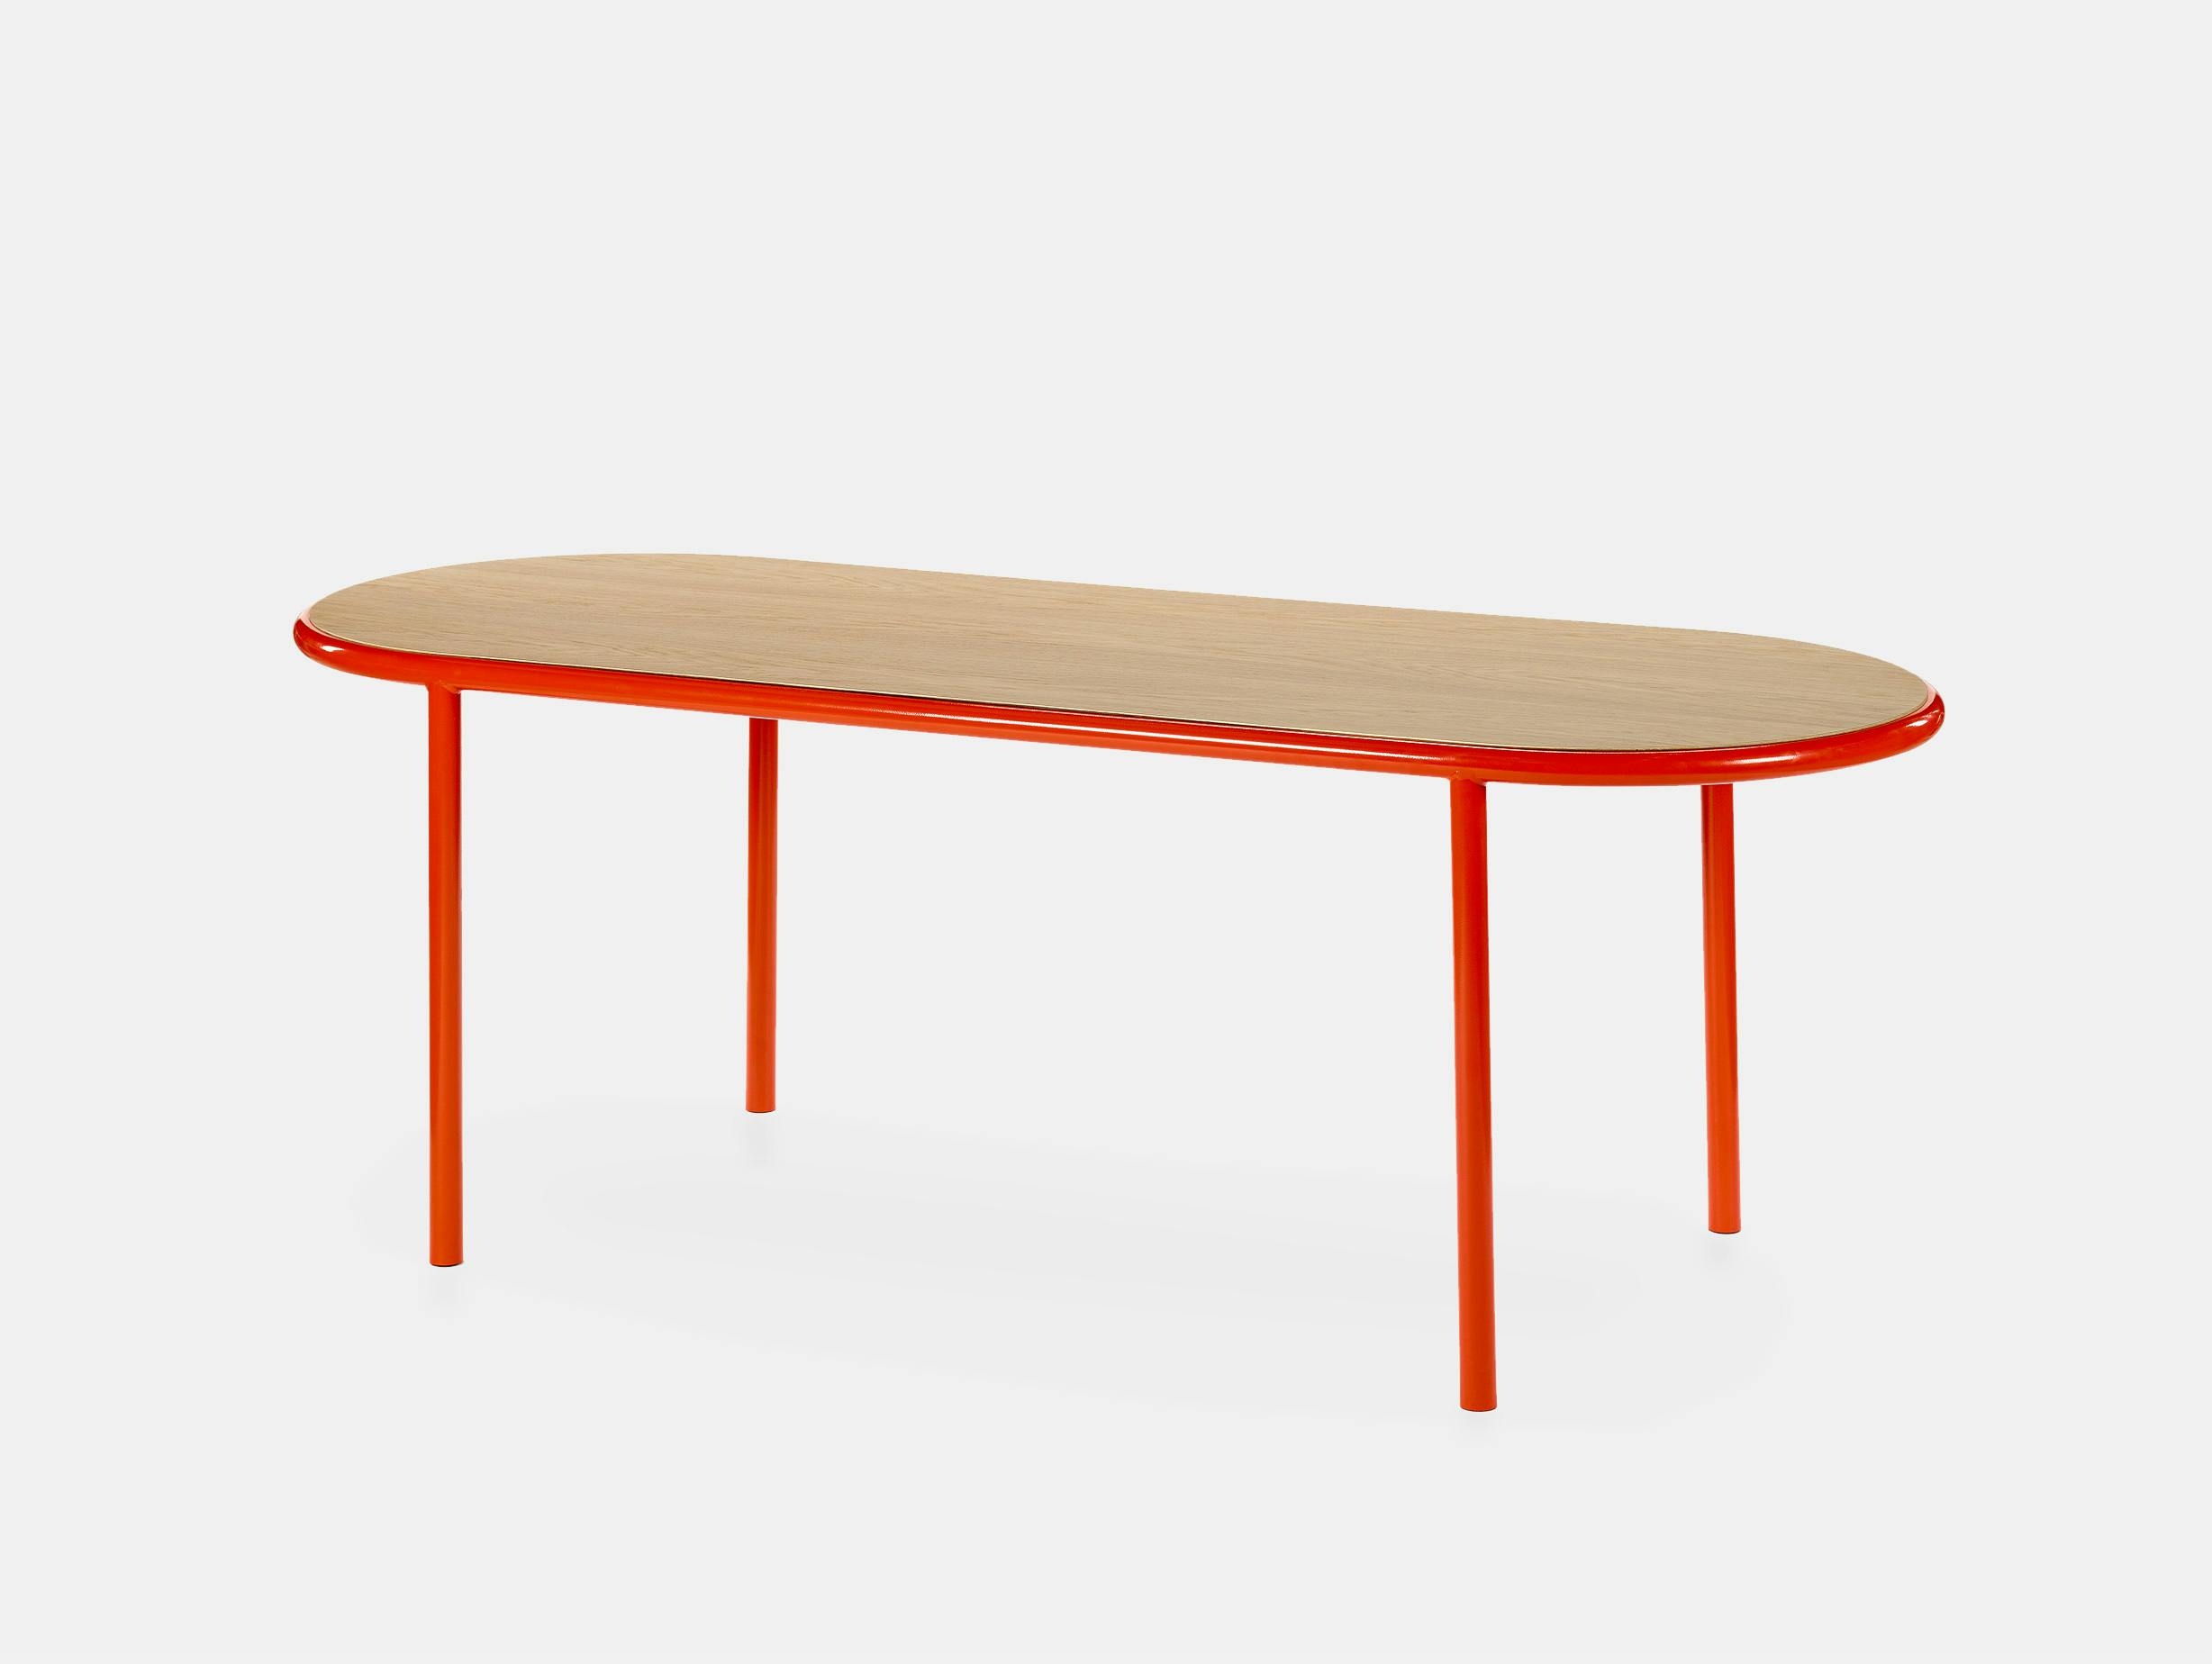 Muller van severen wooden table oval red oak